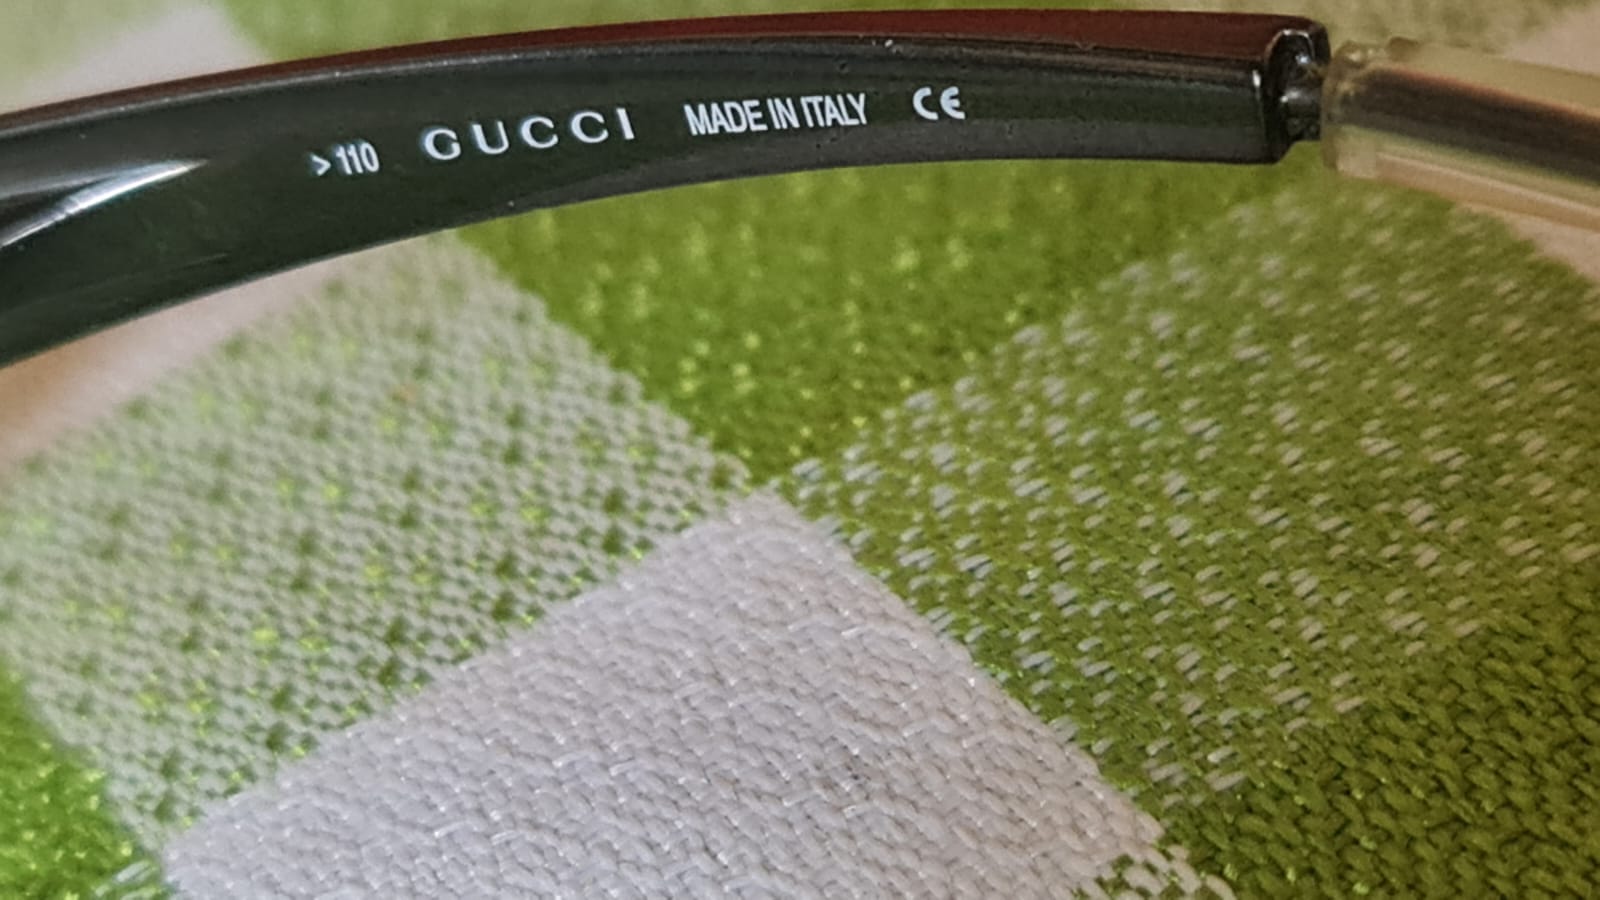 Lente trasparentes Gucci Foto 7225980-1.jpg